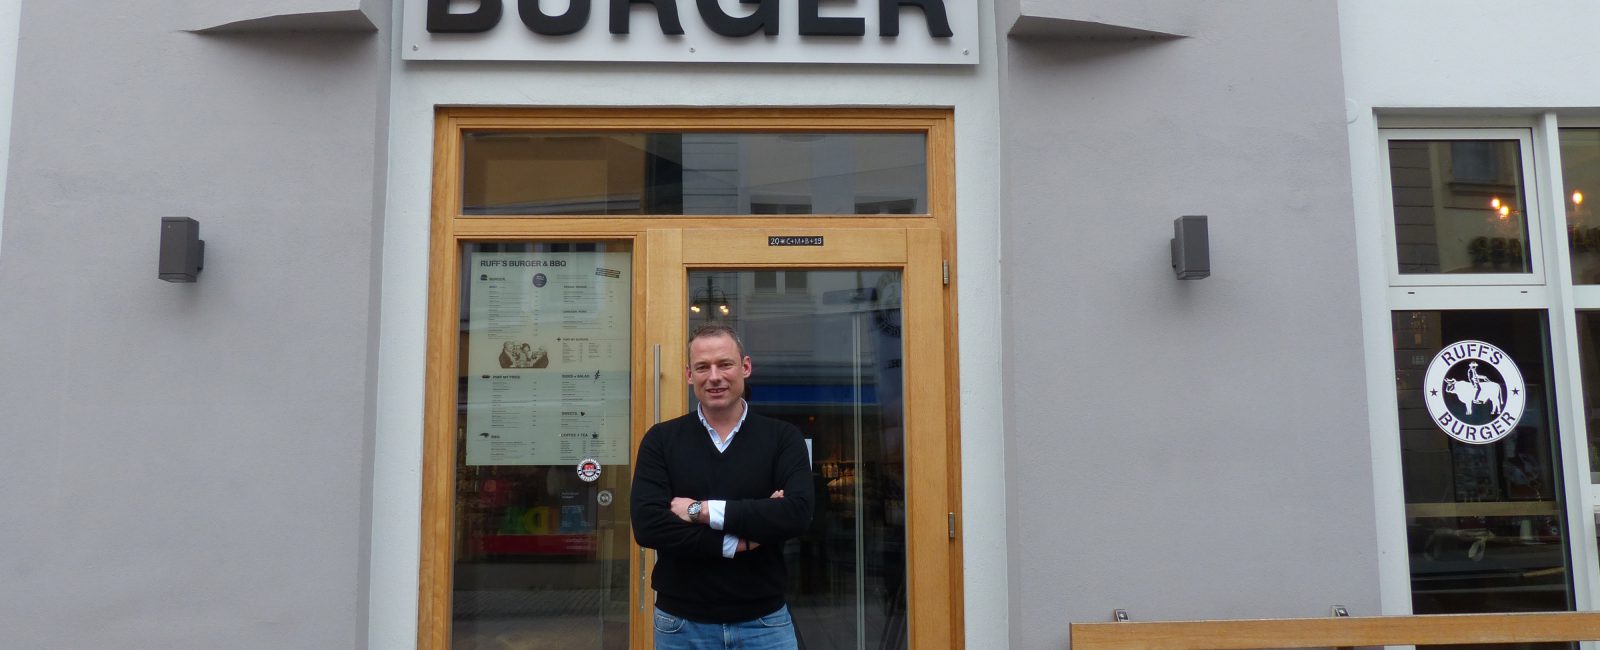 Ruffs Burger Ansbach